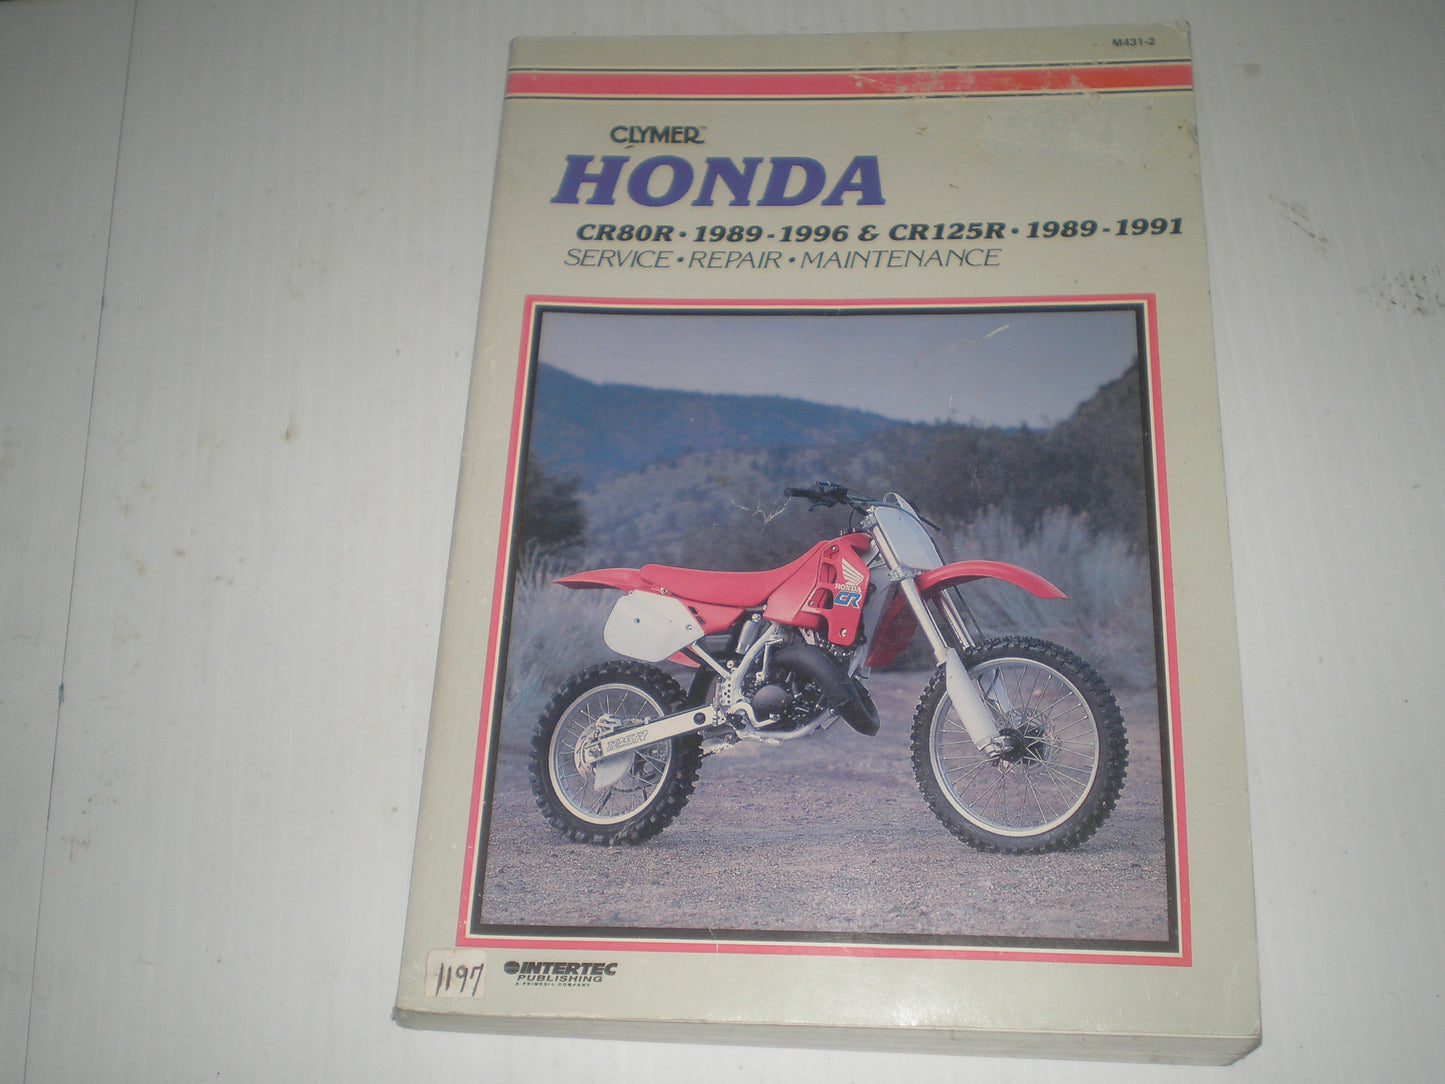 HONDA CR80  CR125 R 1989-1996  Clymer Service Manual  M431-2   #1197